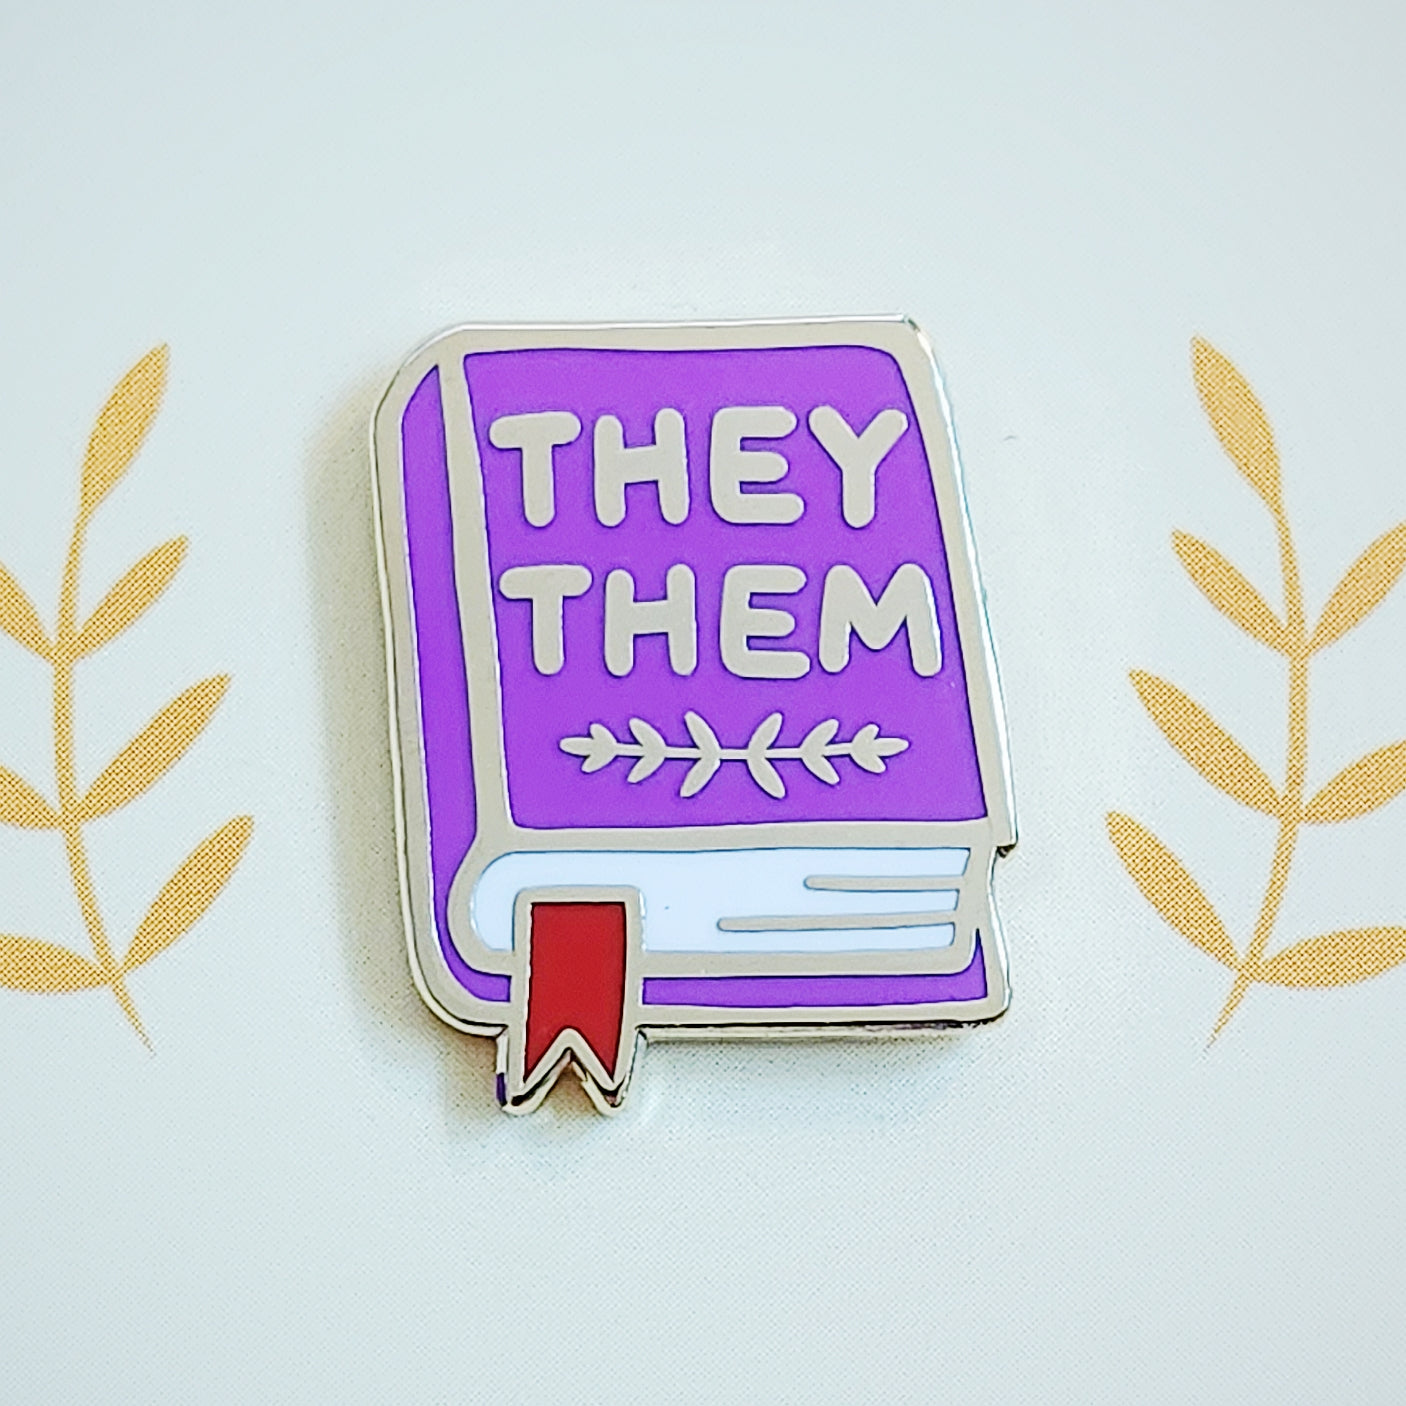 Pronoun Book Pin - they/them